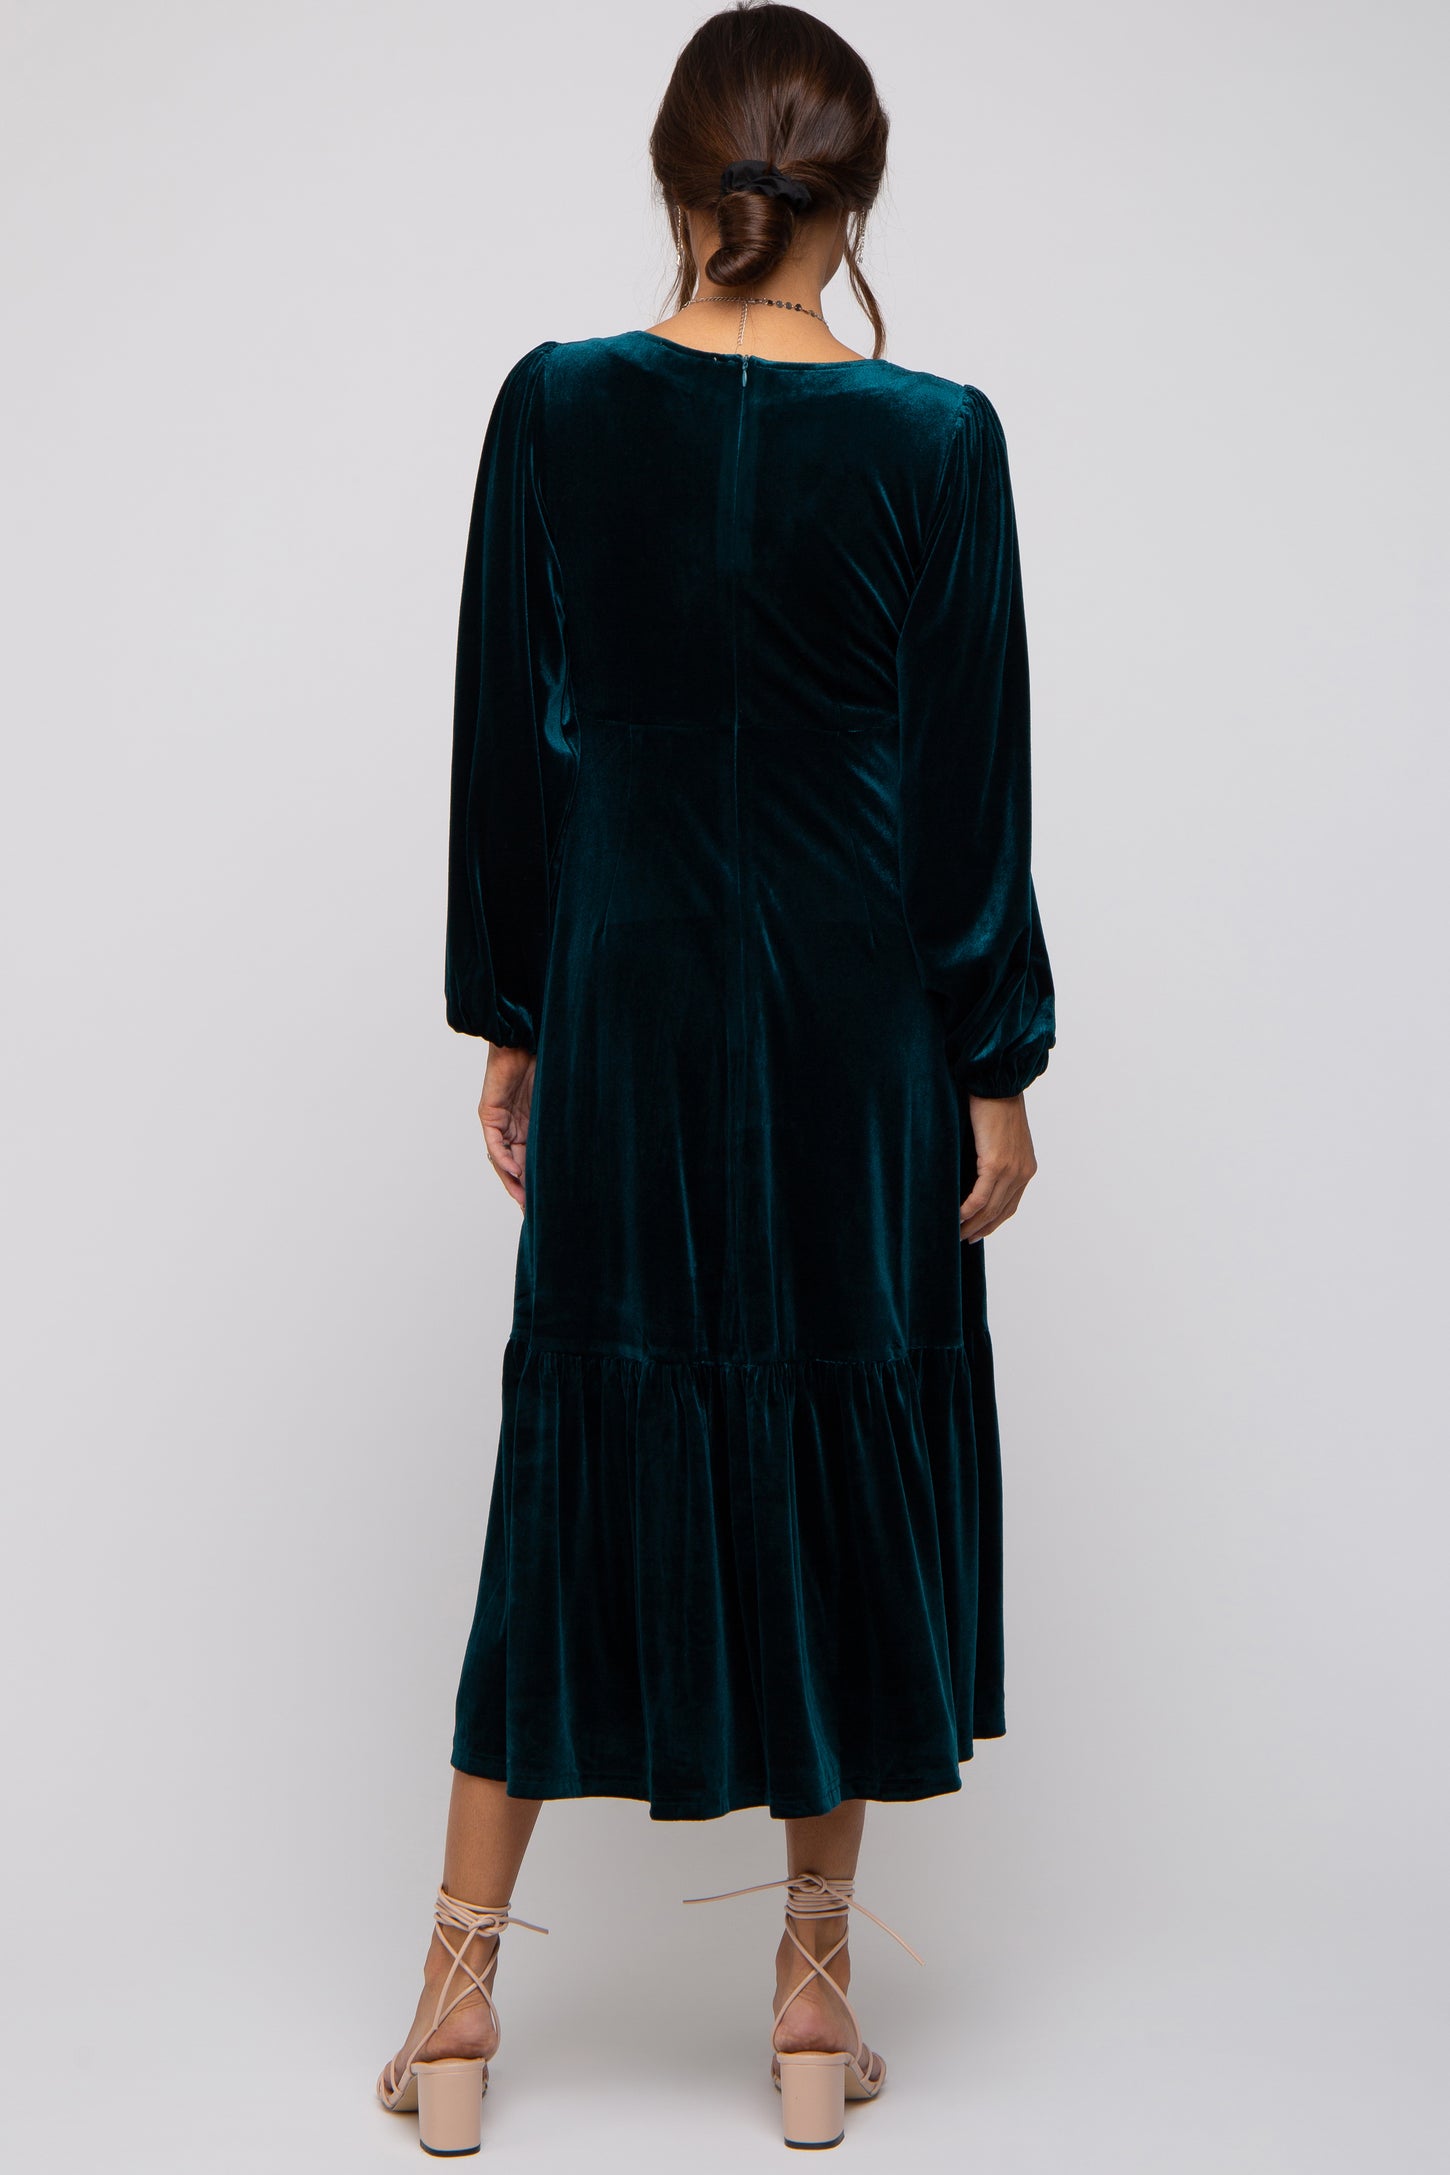 Buy Mint Velvet Green V-Neck Tiered Midi Dress from Next Luxembourg